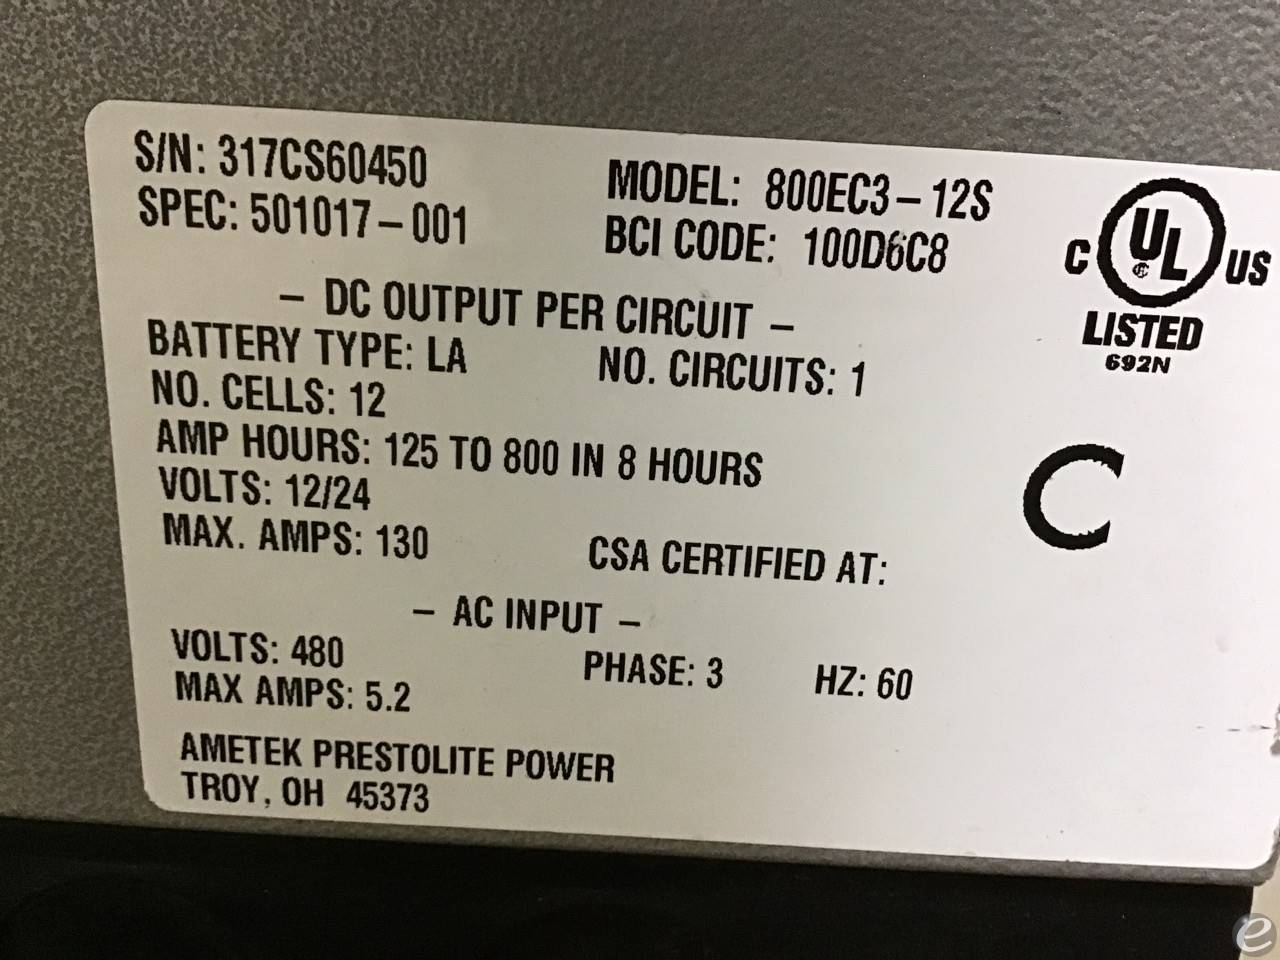 Prestolite Power 800EC3-12S